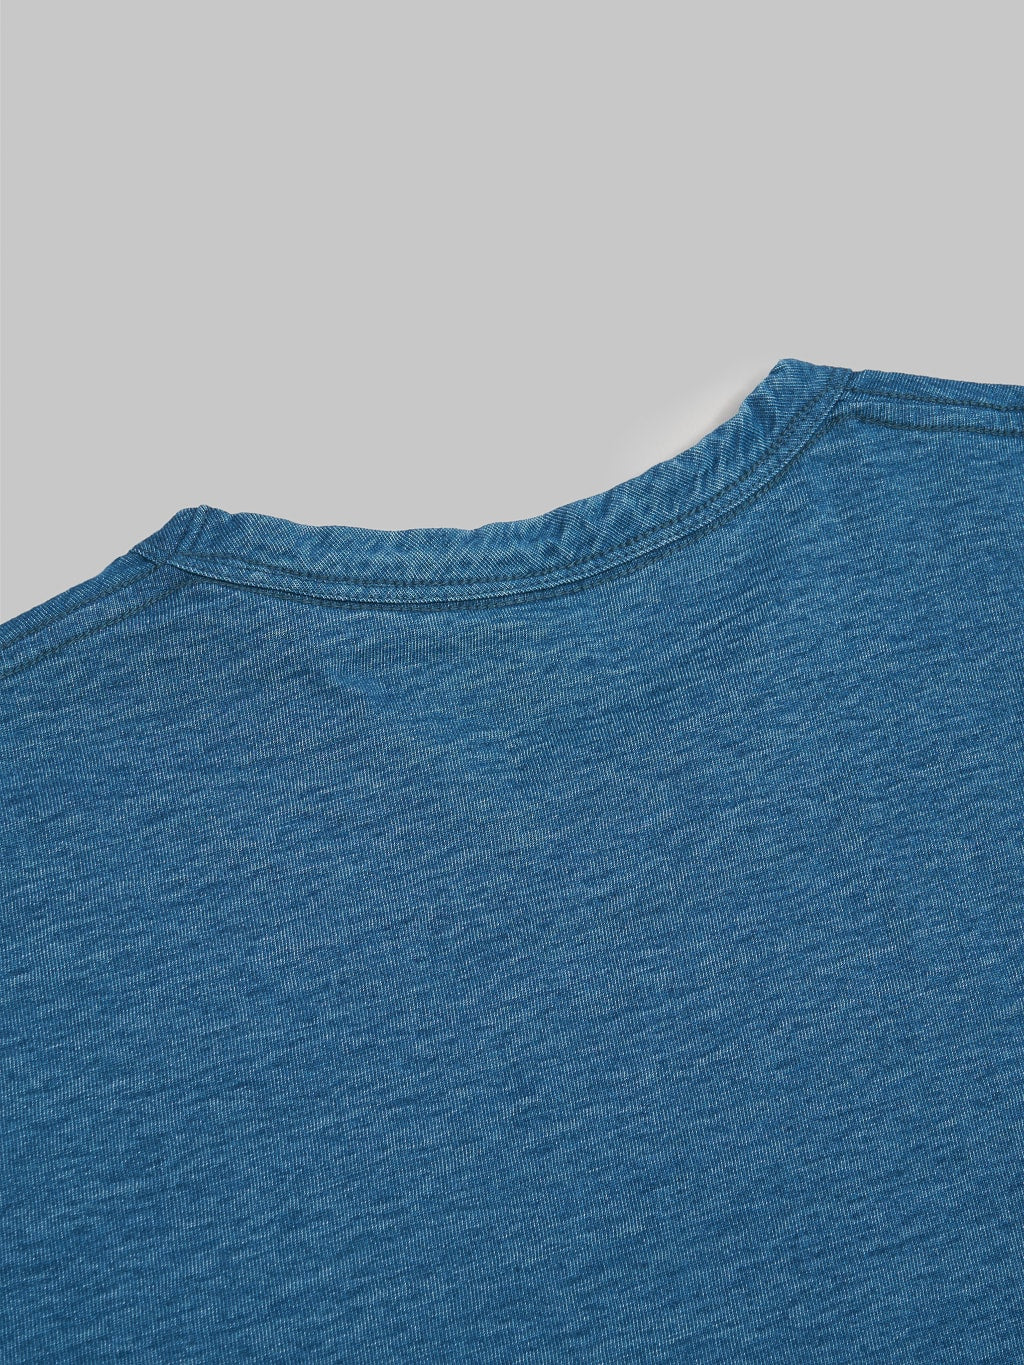 Pure Blue Japan SS5011 Greencast Indigo Dyed Crewneck TShirt cotton fabric